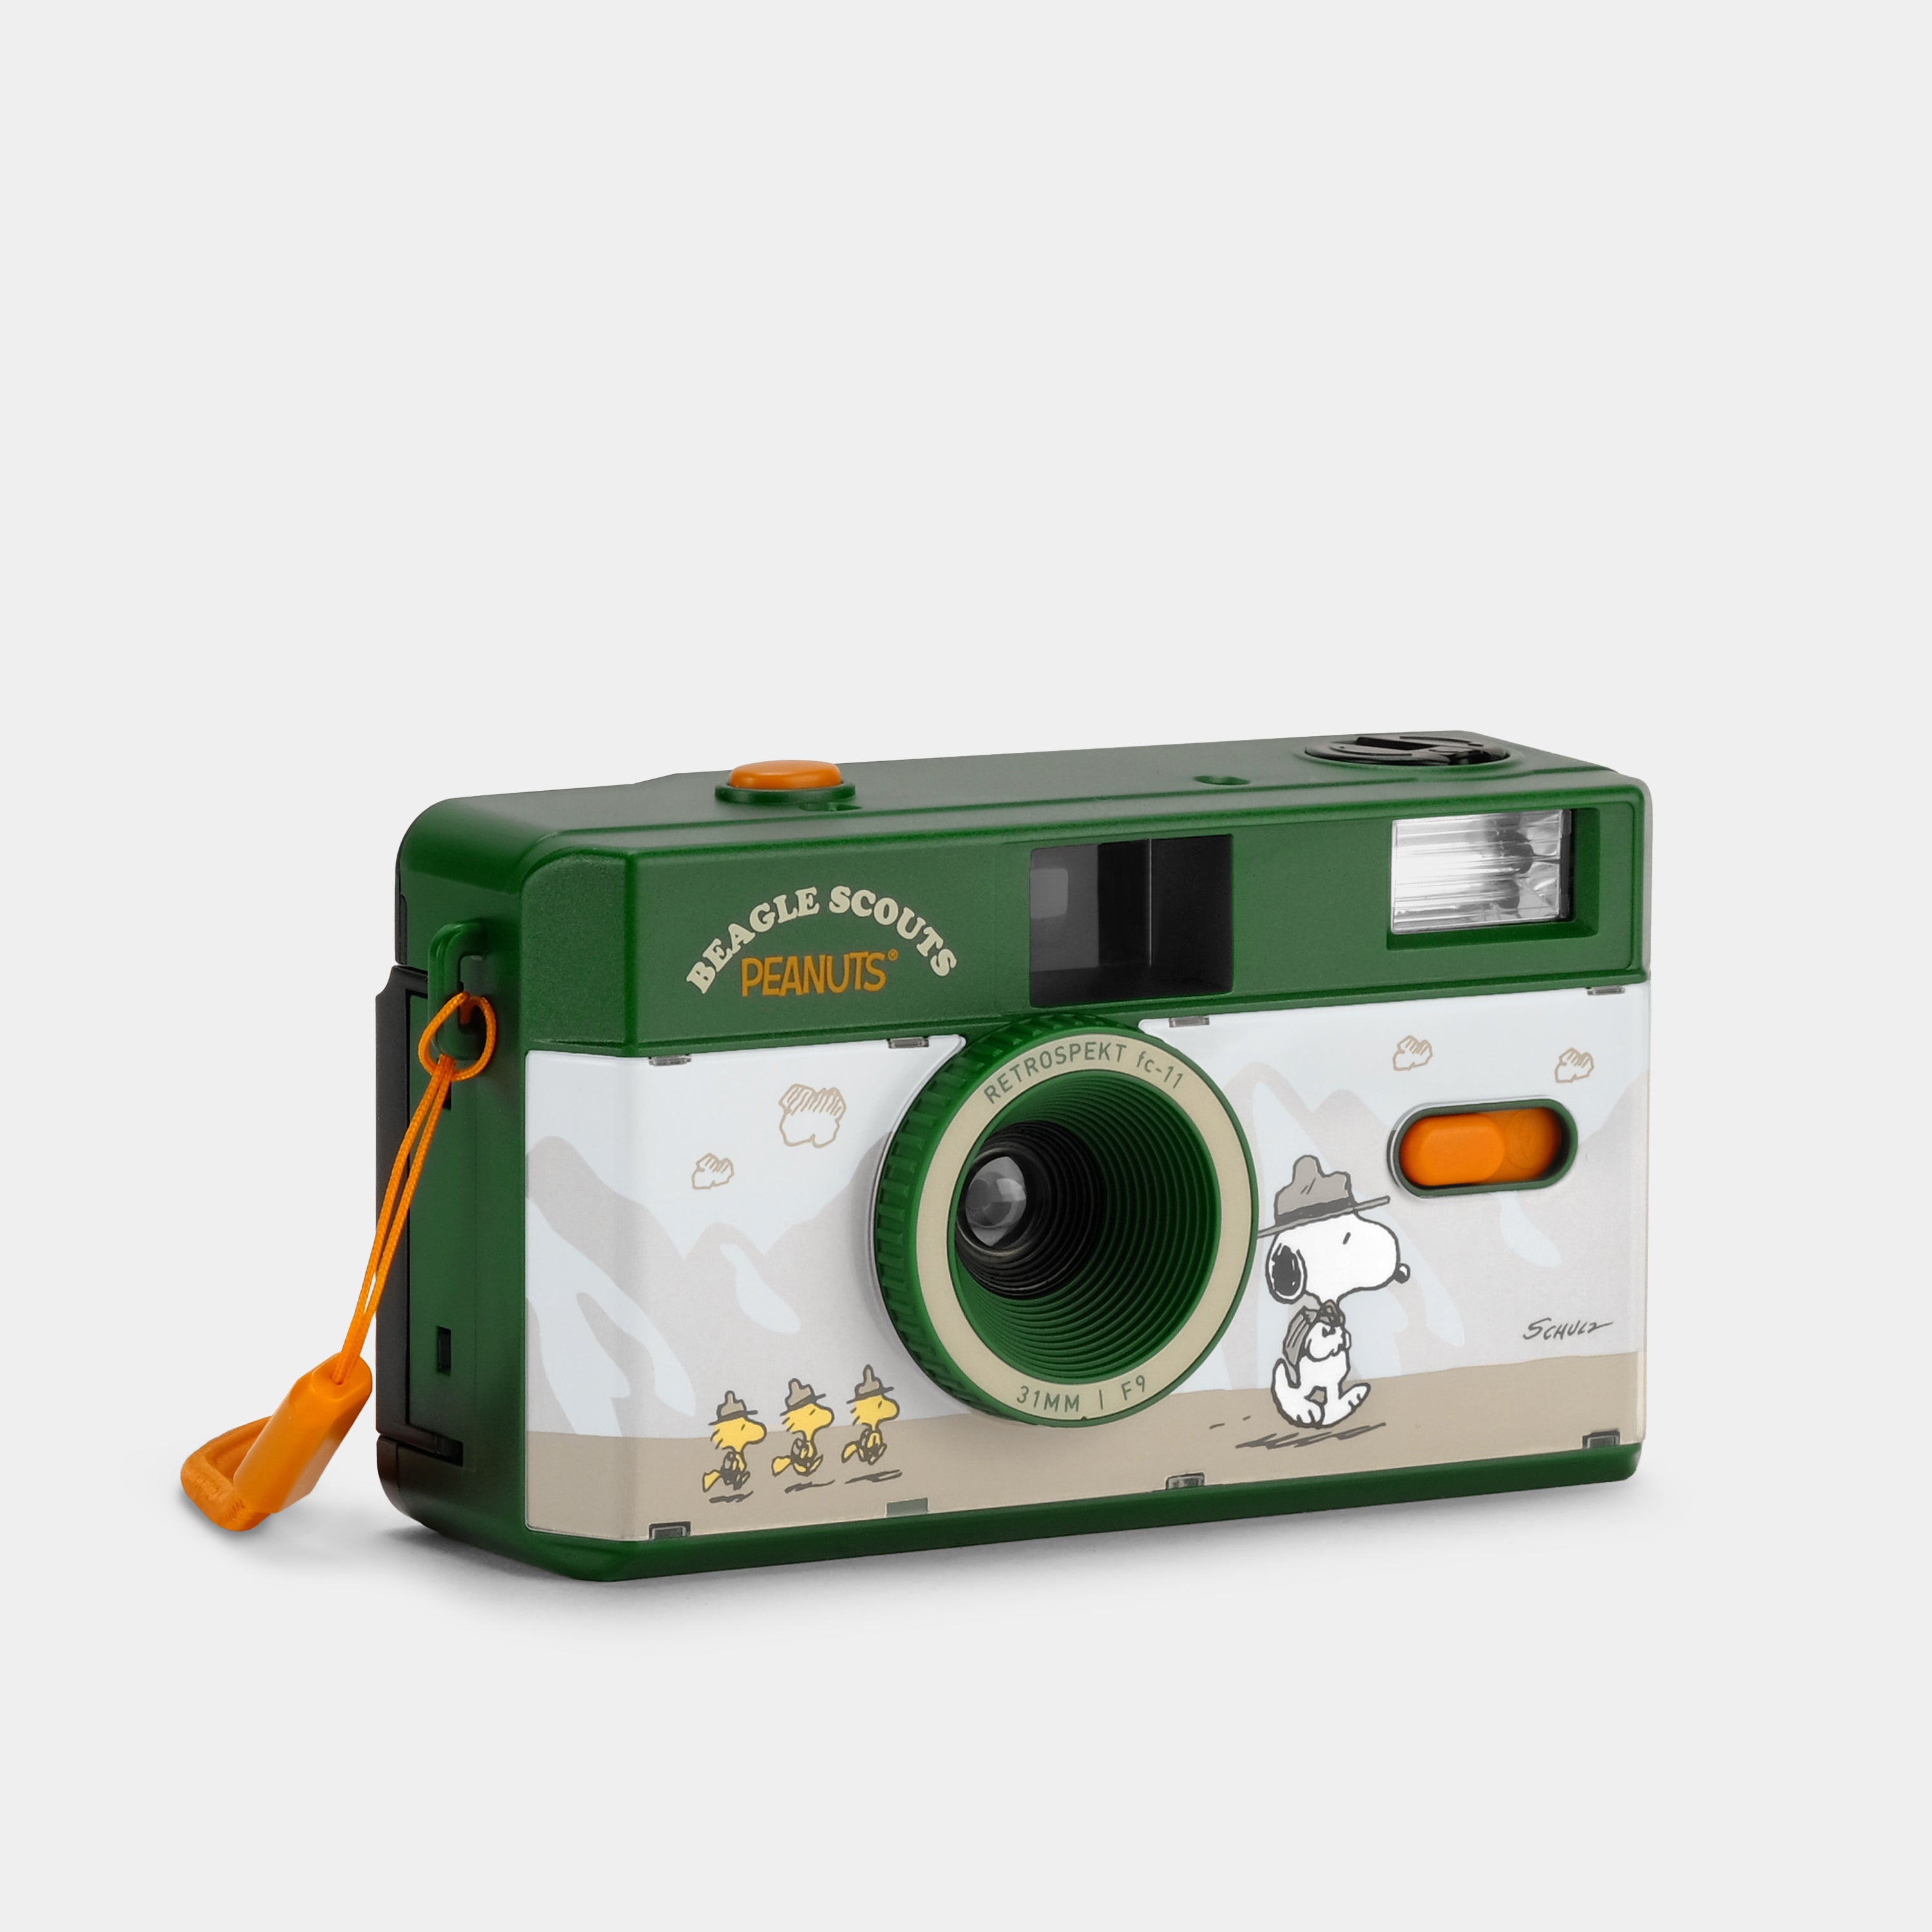 Kodak Funsaver Disposable Camera 35mm LENS ONLY for DYI Digital Camera Lens  